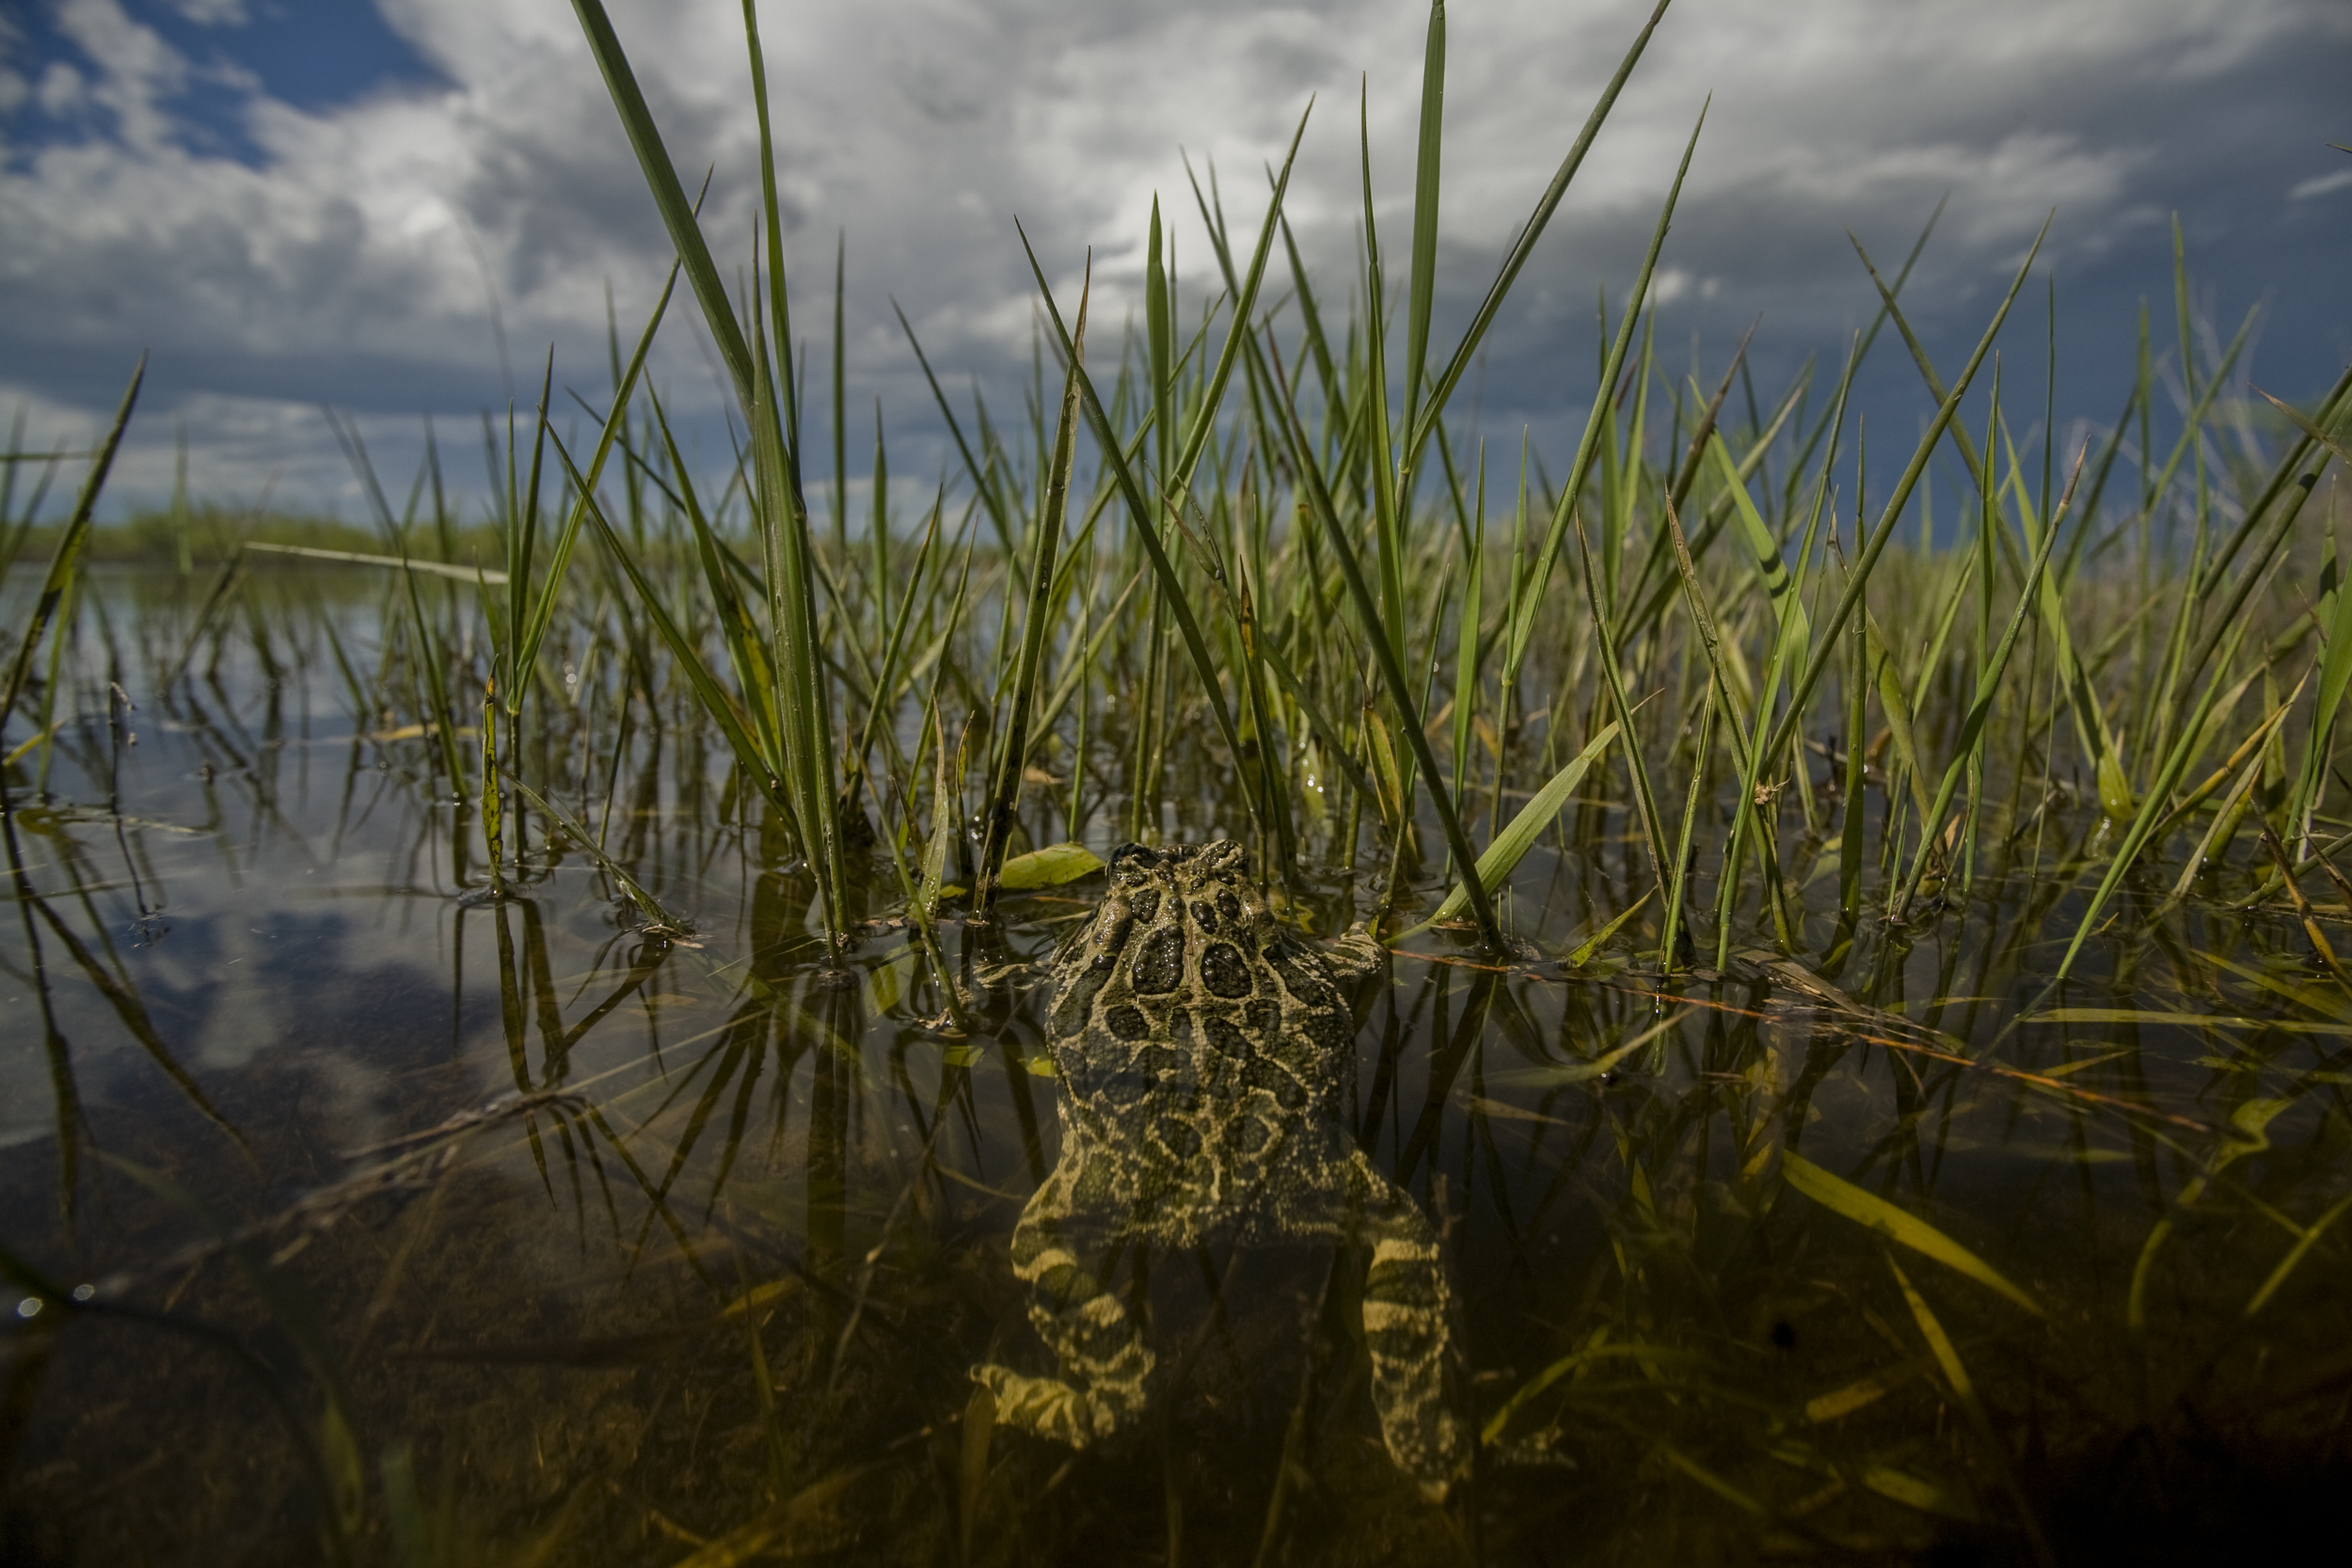  Great plains toad (Anaxyrus cognatus) Pawnee National Grasslands, Colorado 